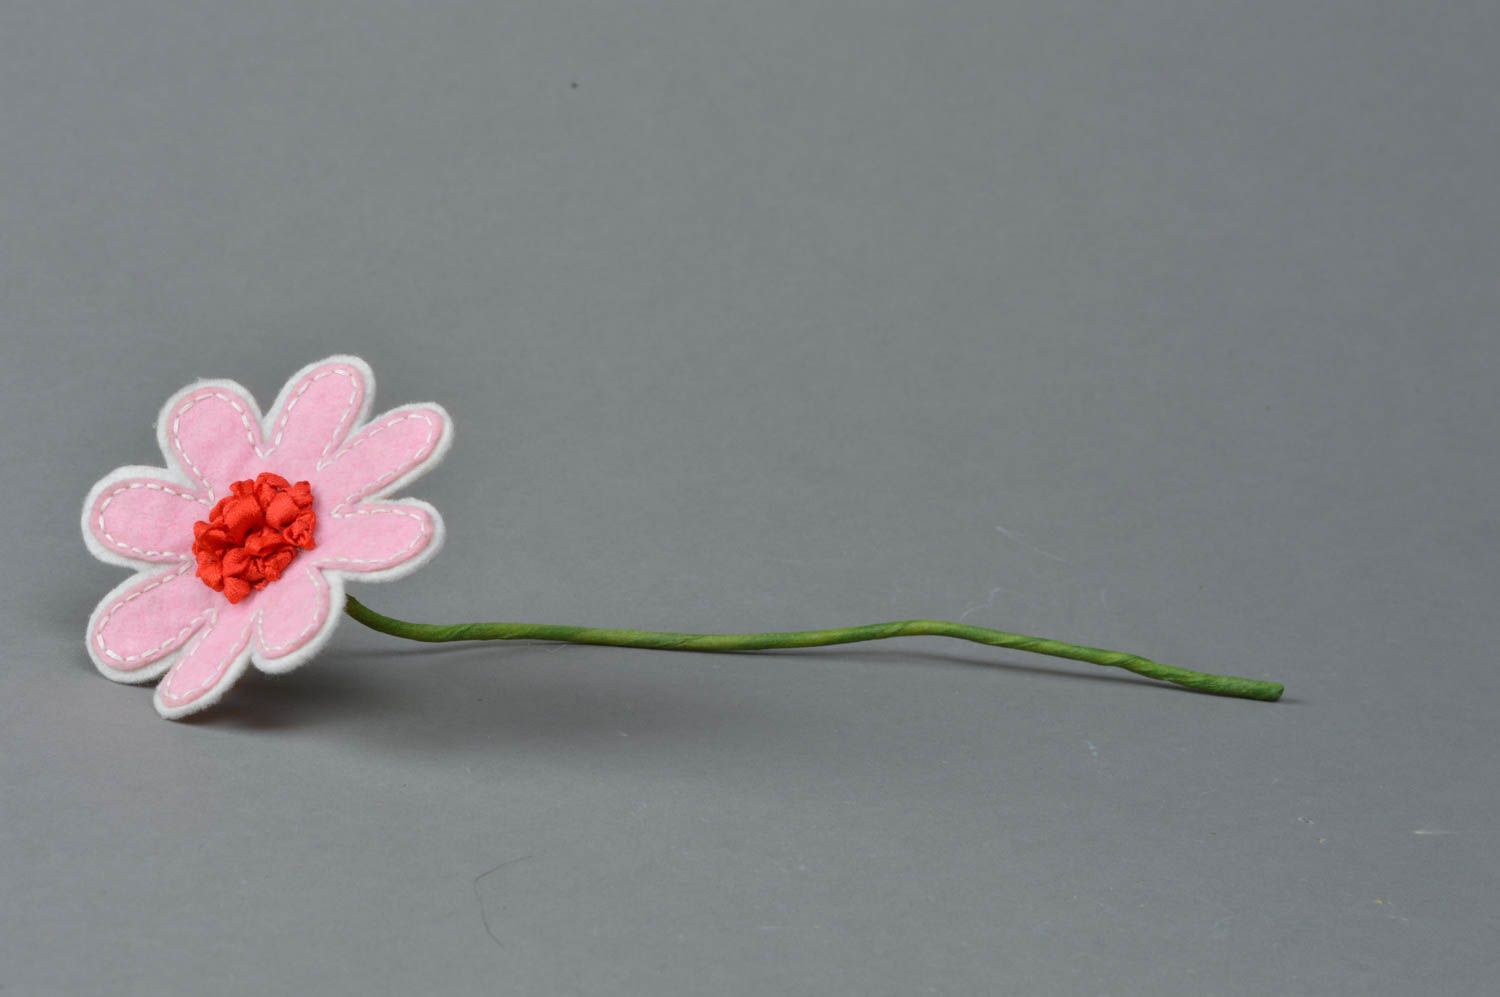 Цветок из фетра ромашка розовая с белым на гибком стебле красивый ручная рбаота фото 1